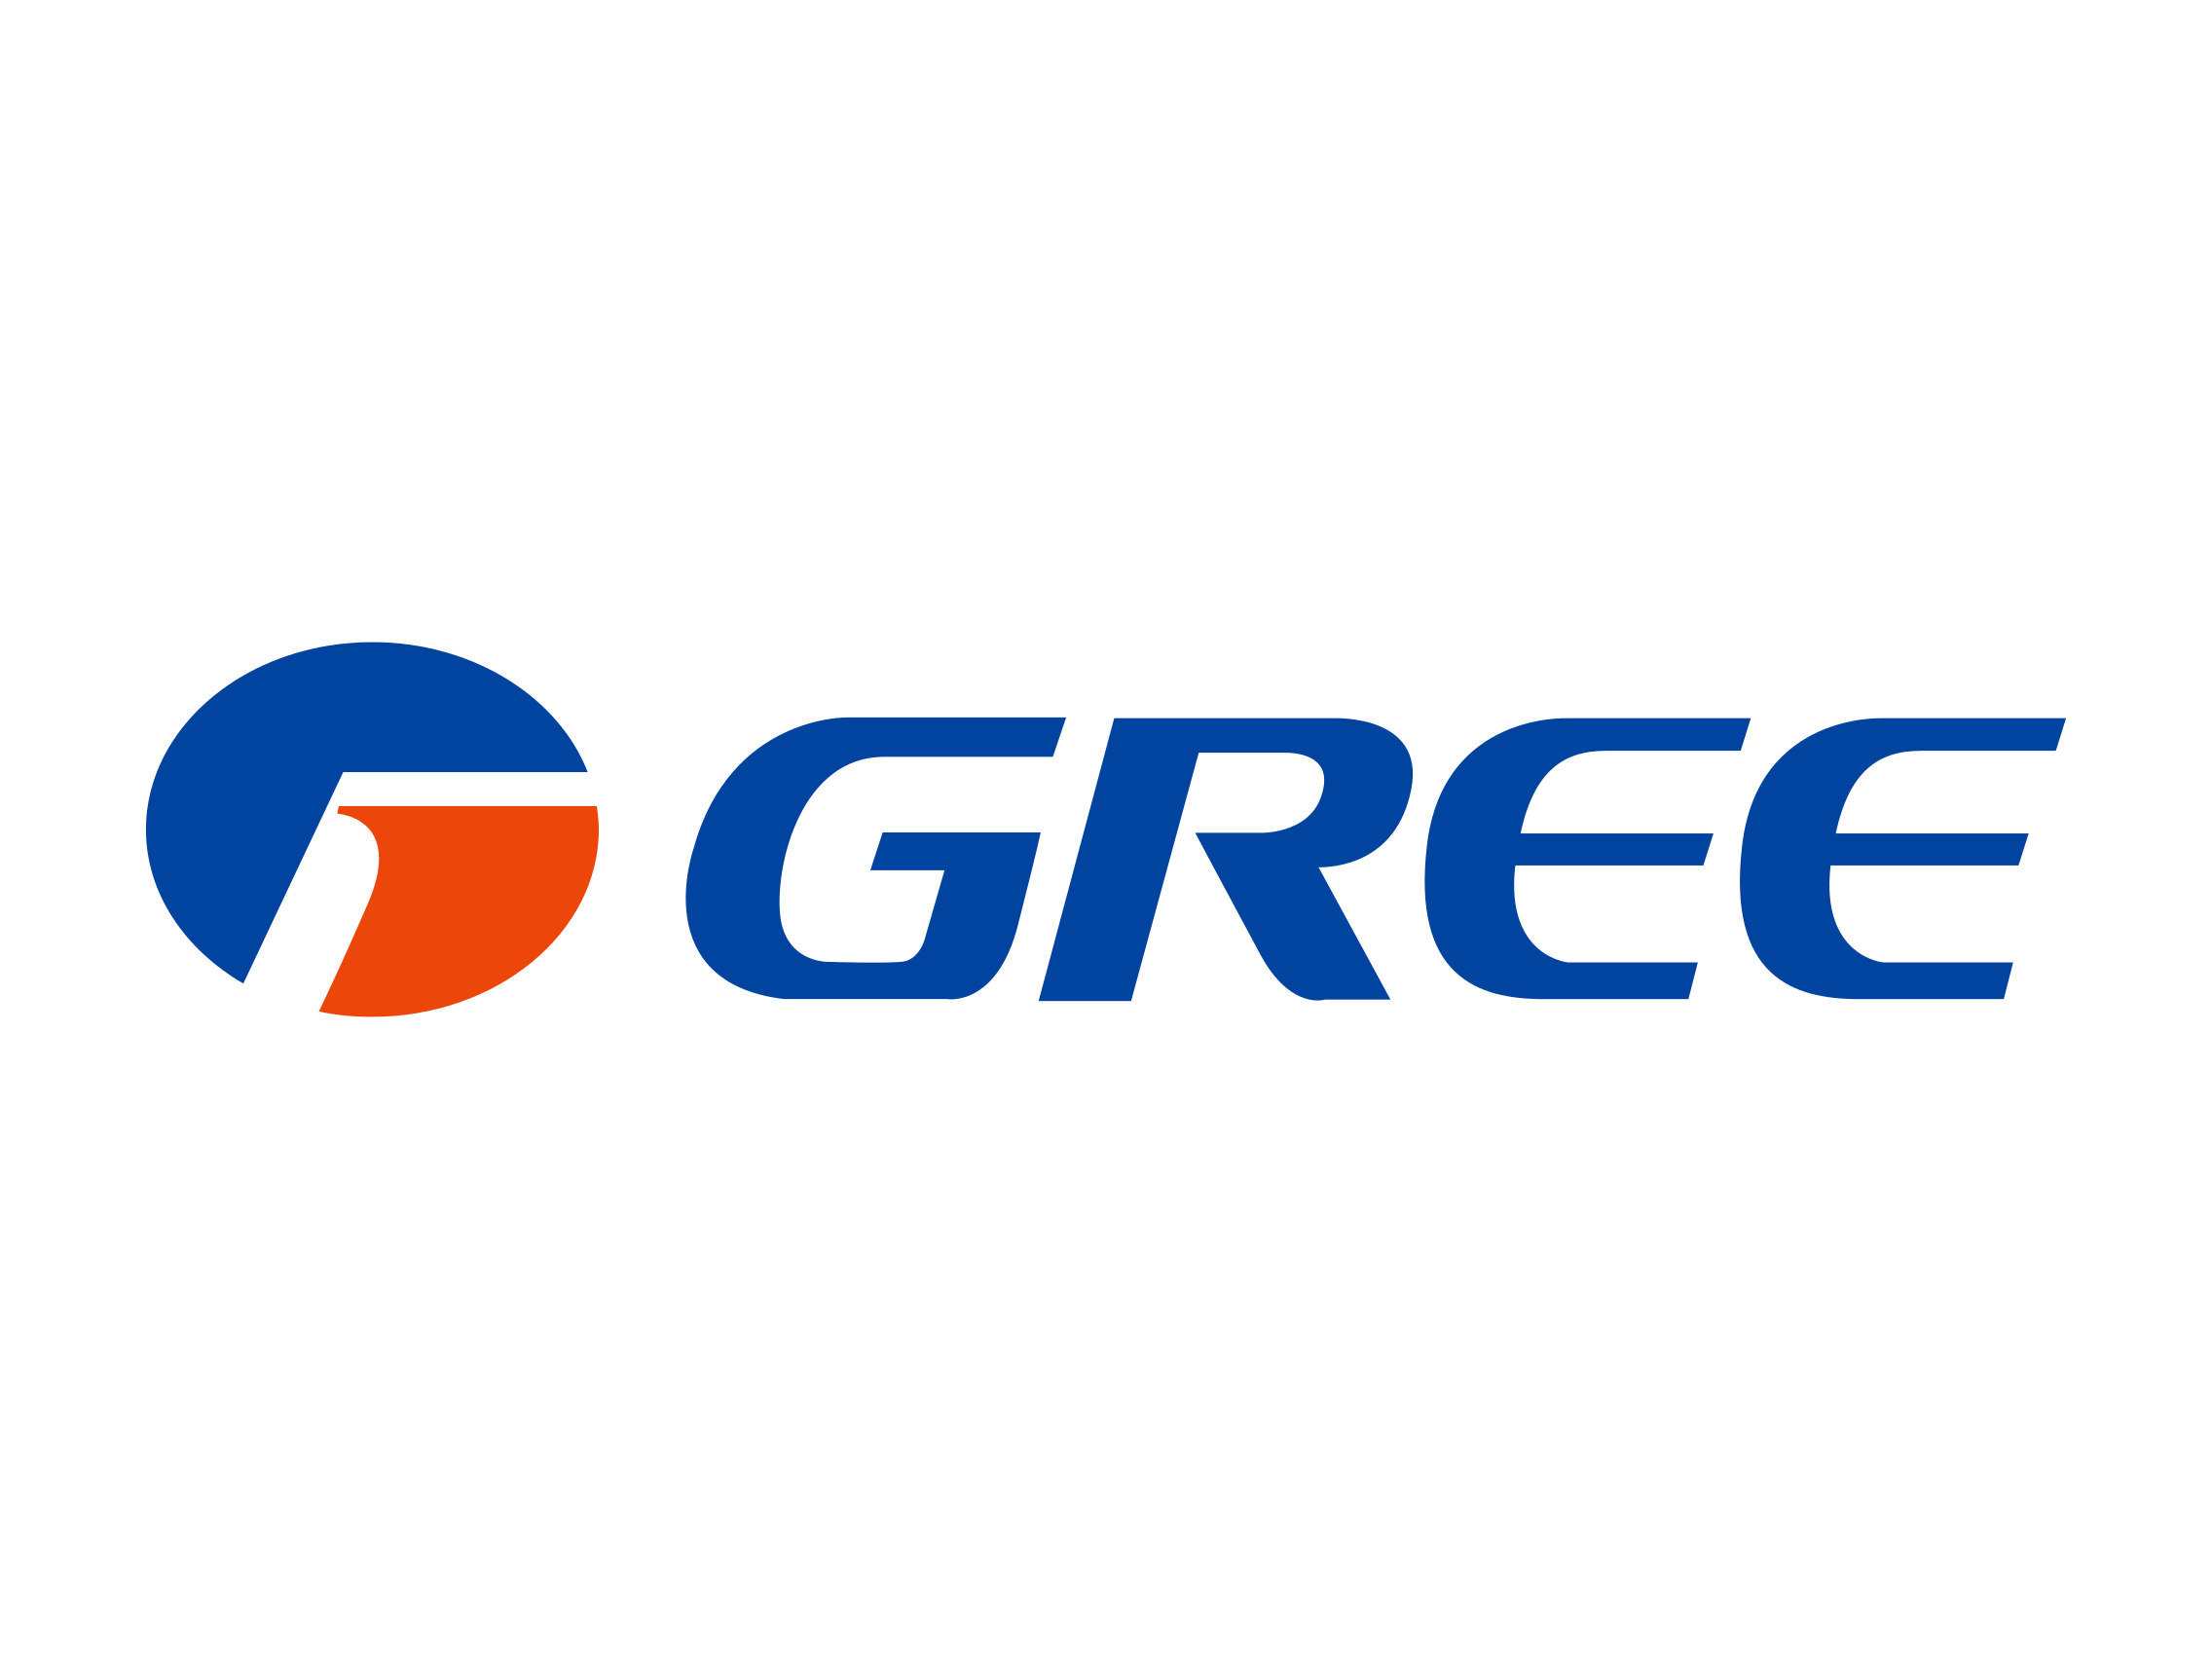 gree-electric-logo